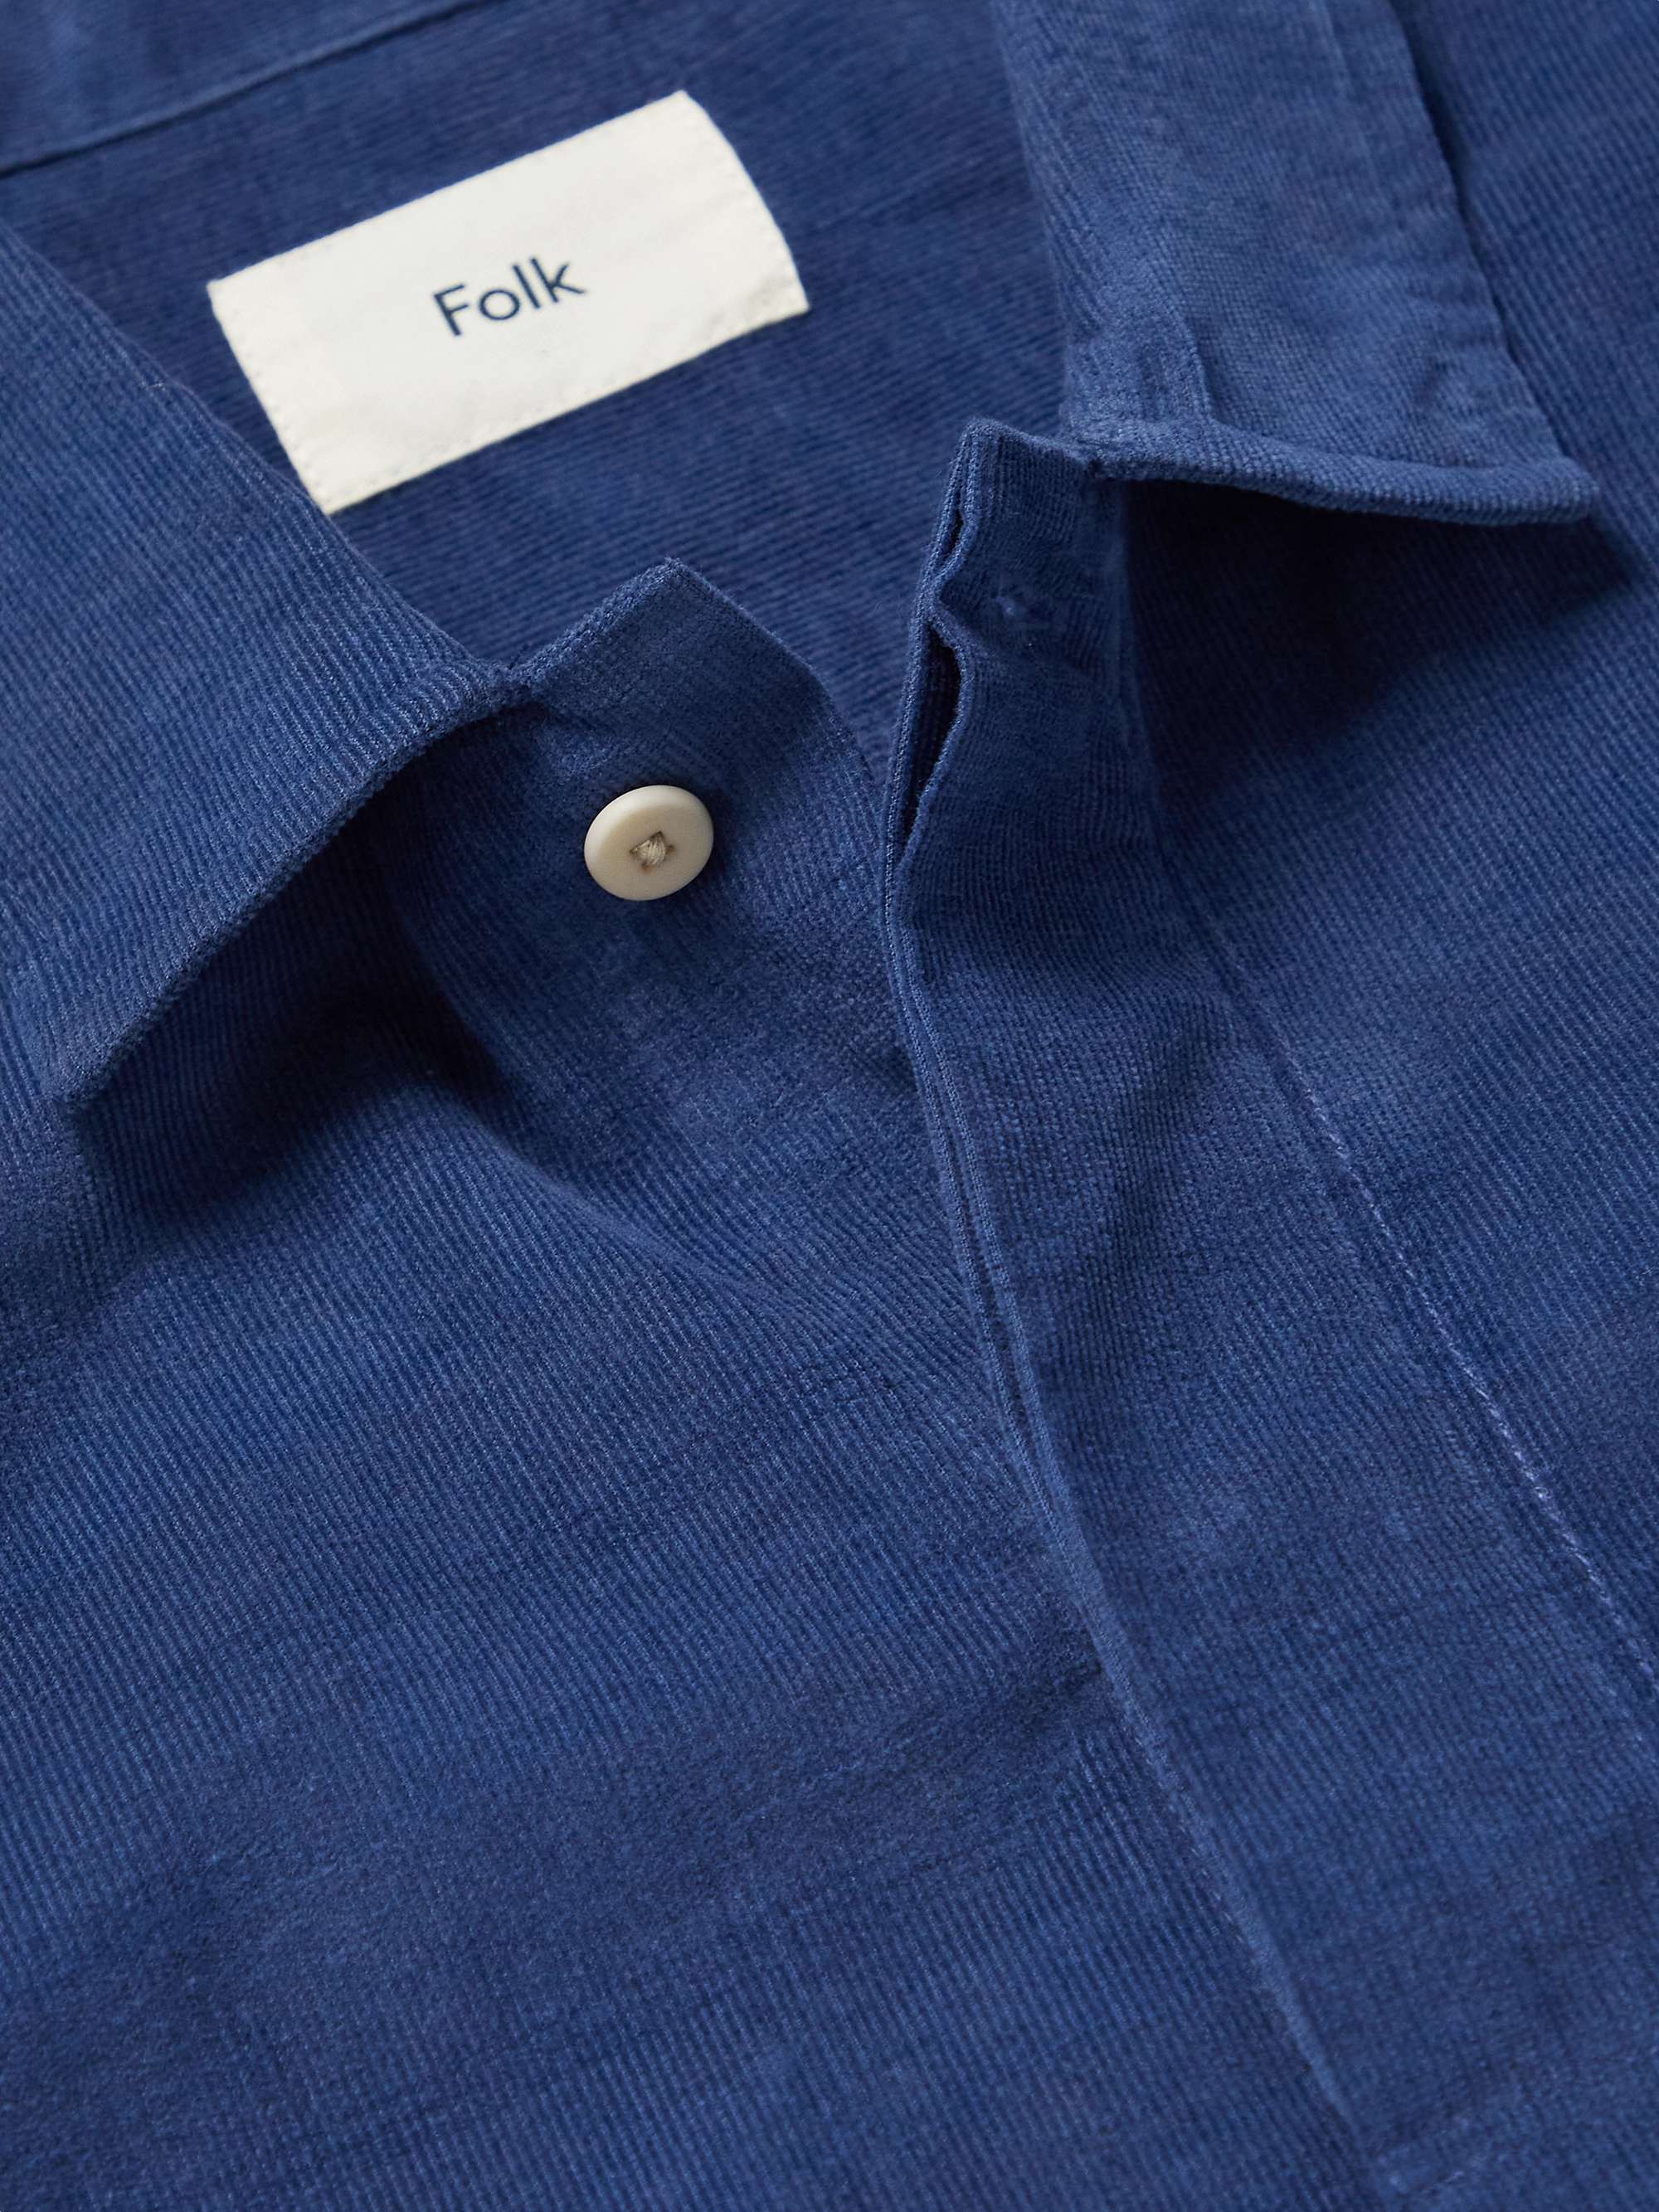 FOLK Patch Checked Cotton and Linen-Blend Shirt